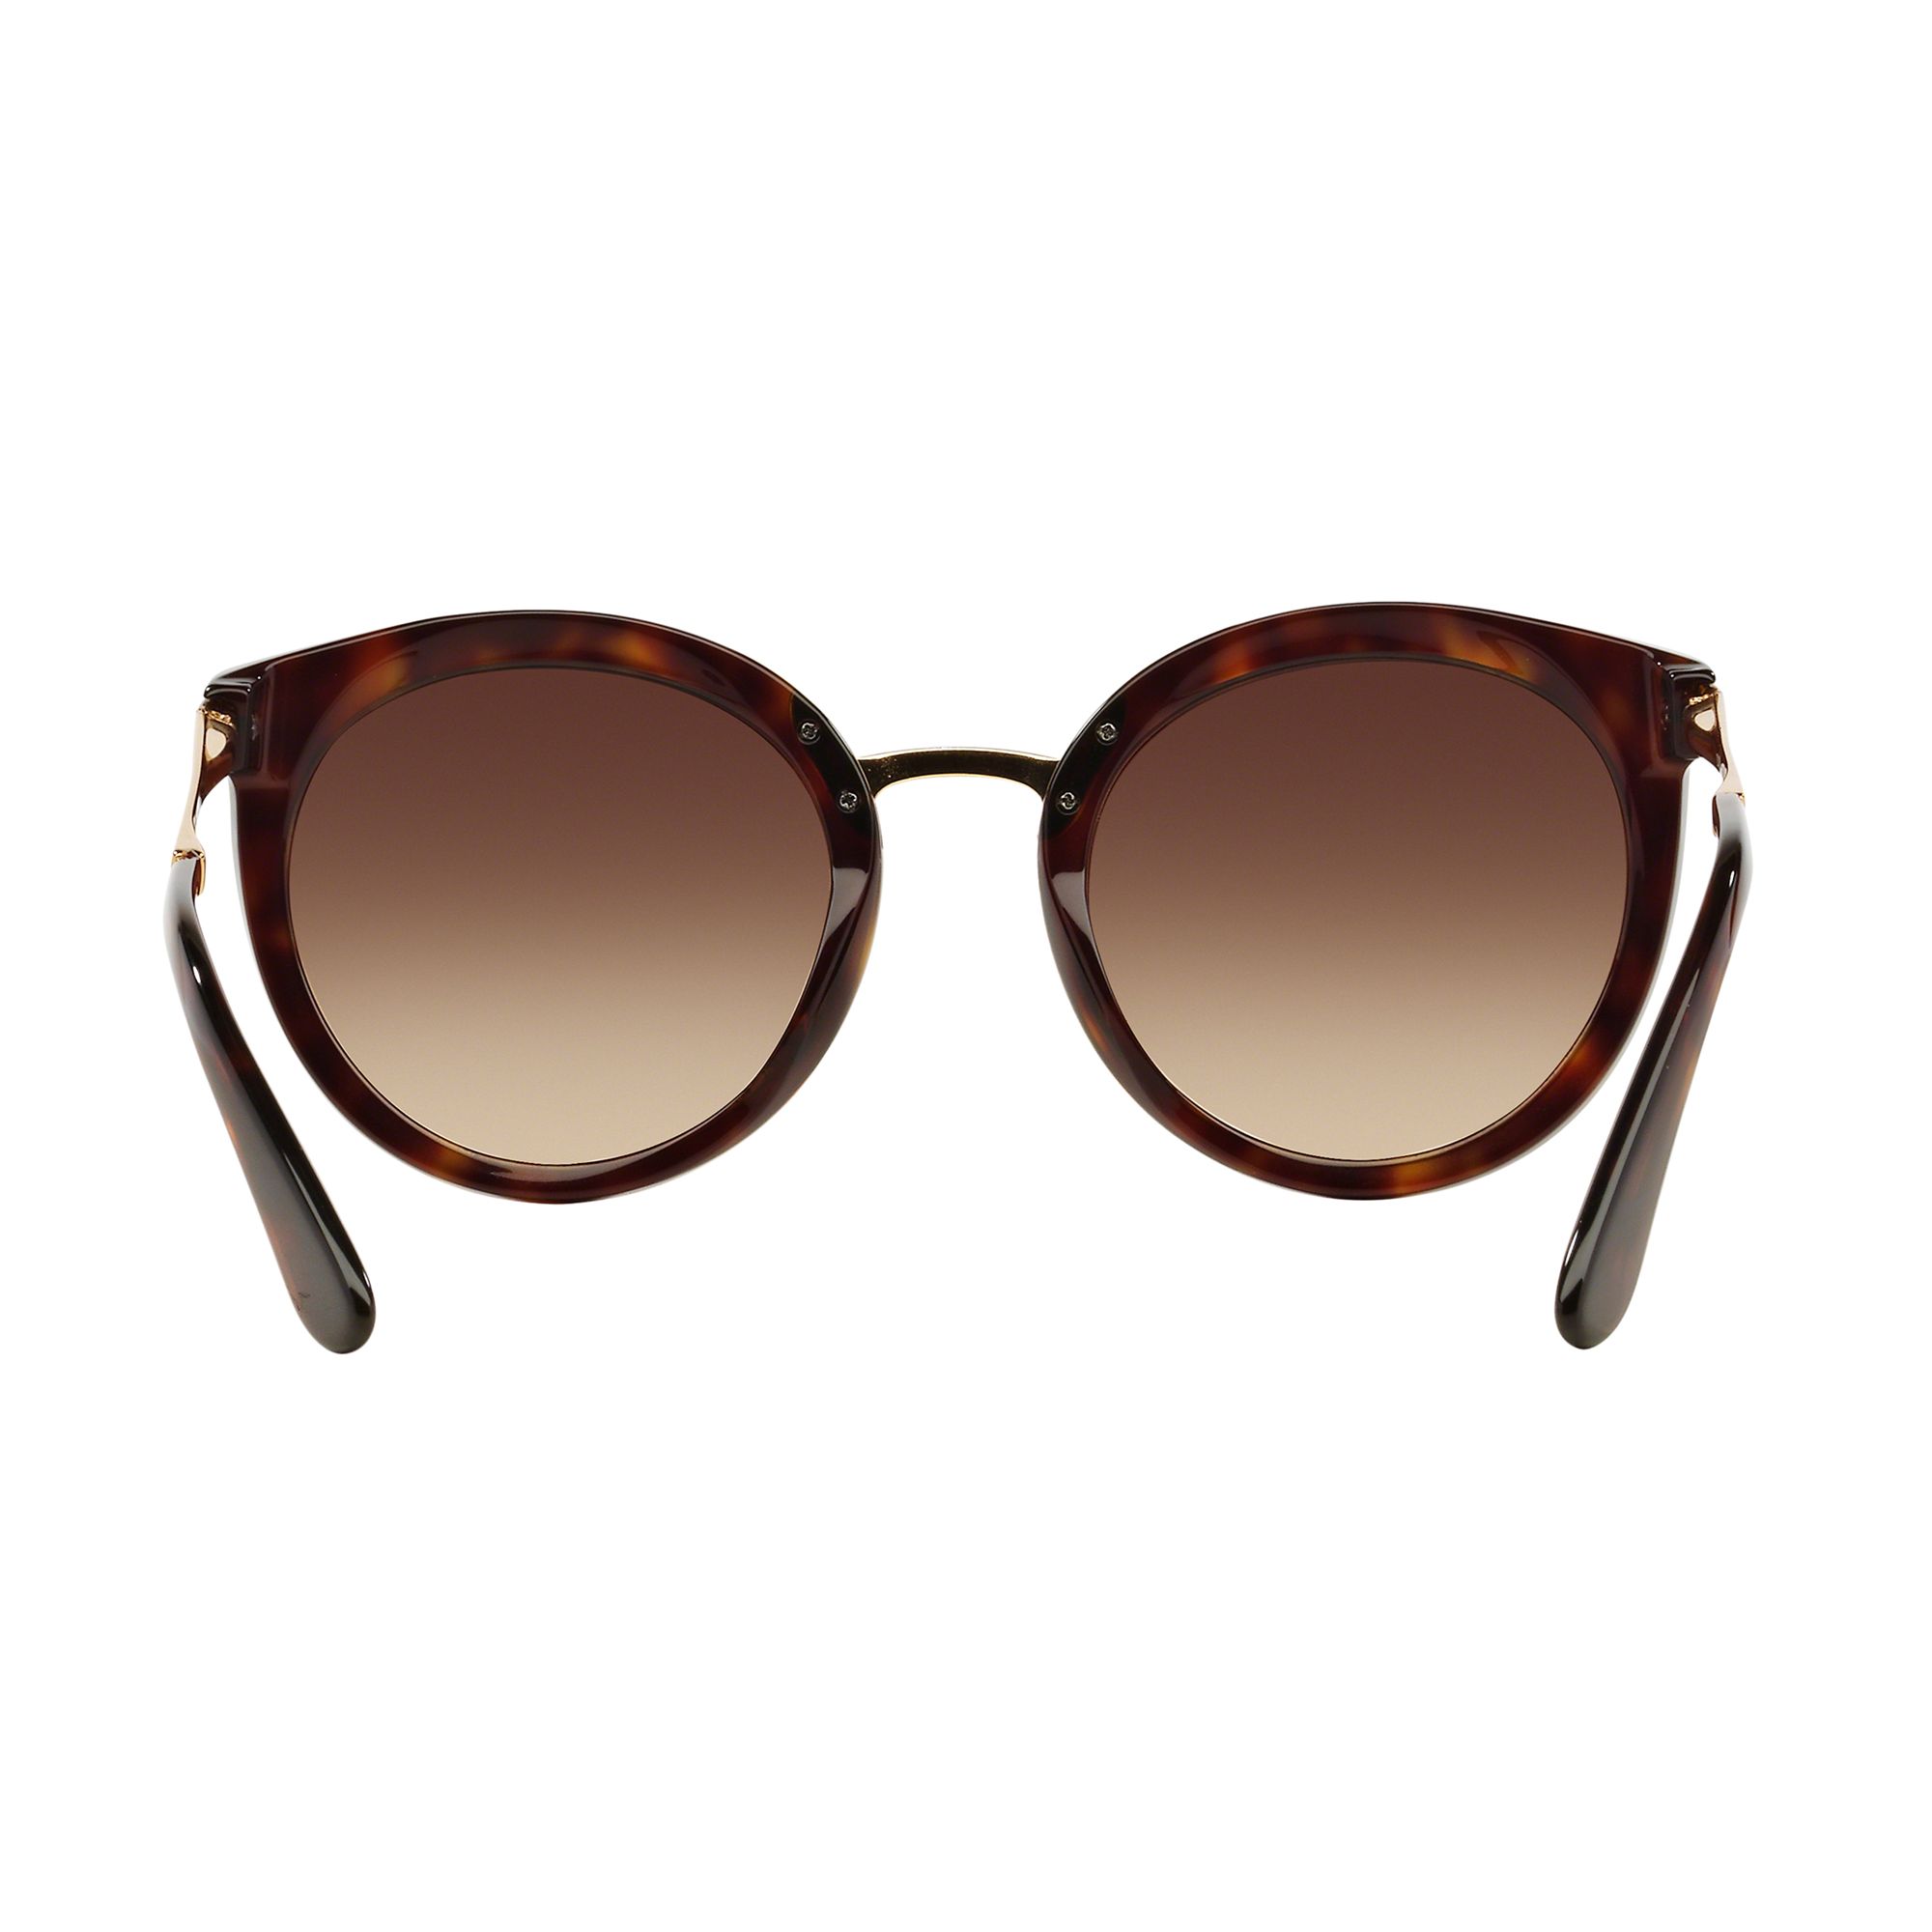 Buy Dolce & Gabbana DG4268 Round Sunglasses Online at johnlewis.com